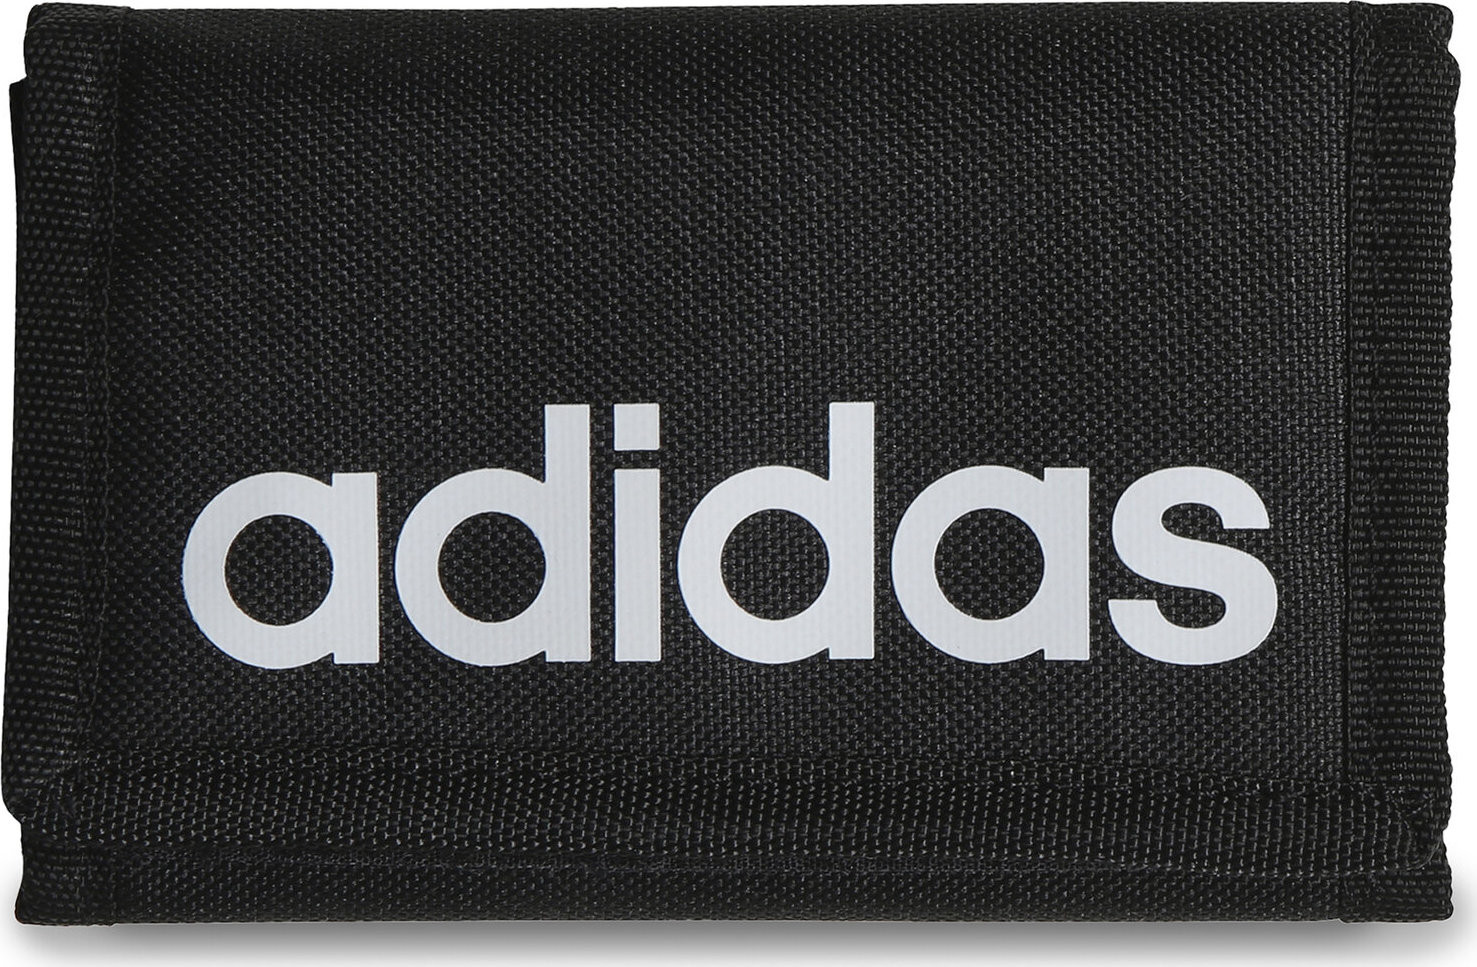 Peněženka adidas Essentials Wallet HT4741 black/white